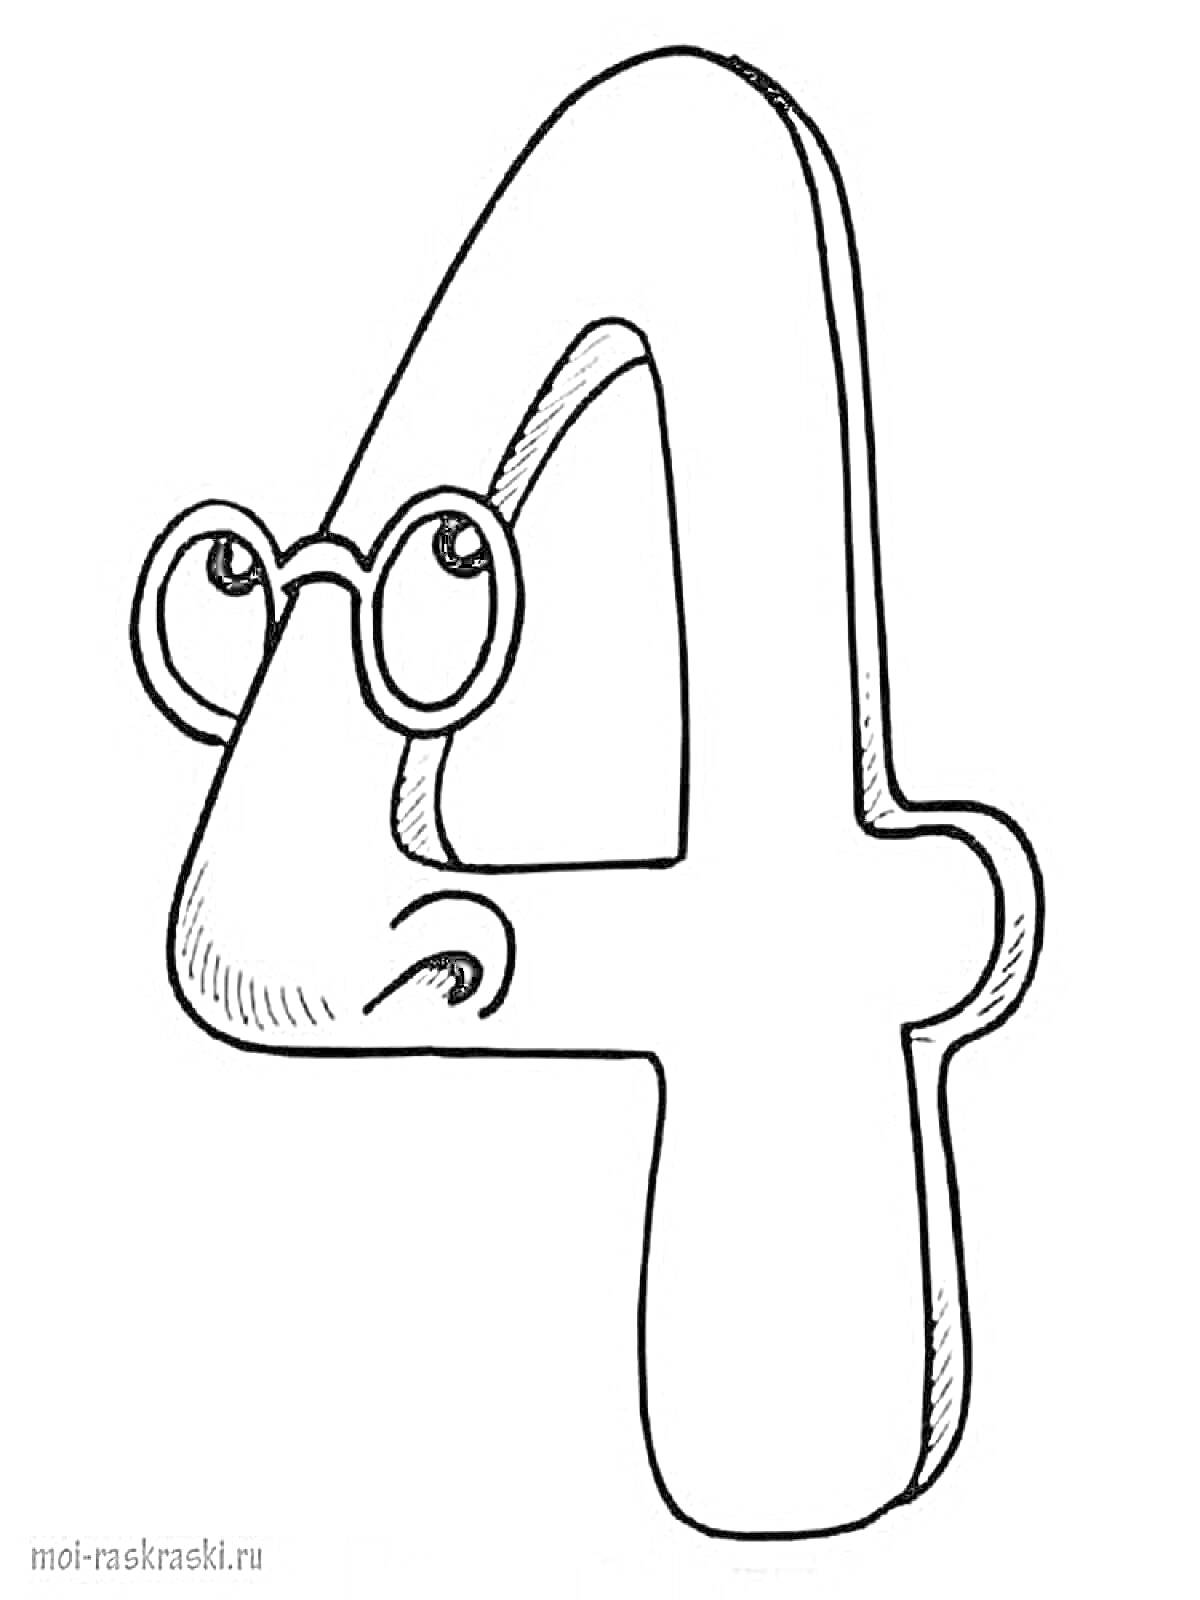 Раскраска Цифра 4 с лицом и очками